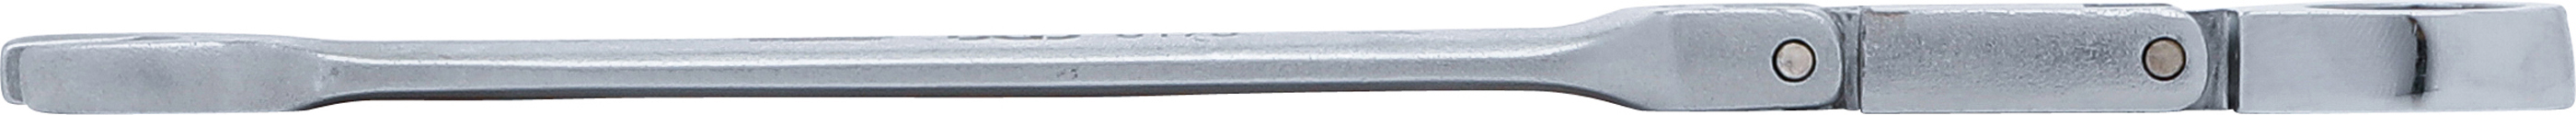 BGS Doppelgelenk-Ratschenring-Maulschlüssel | abwinkelbar | SW 15 mm